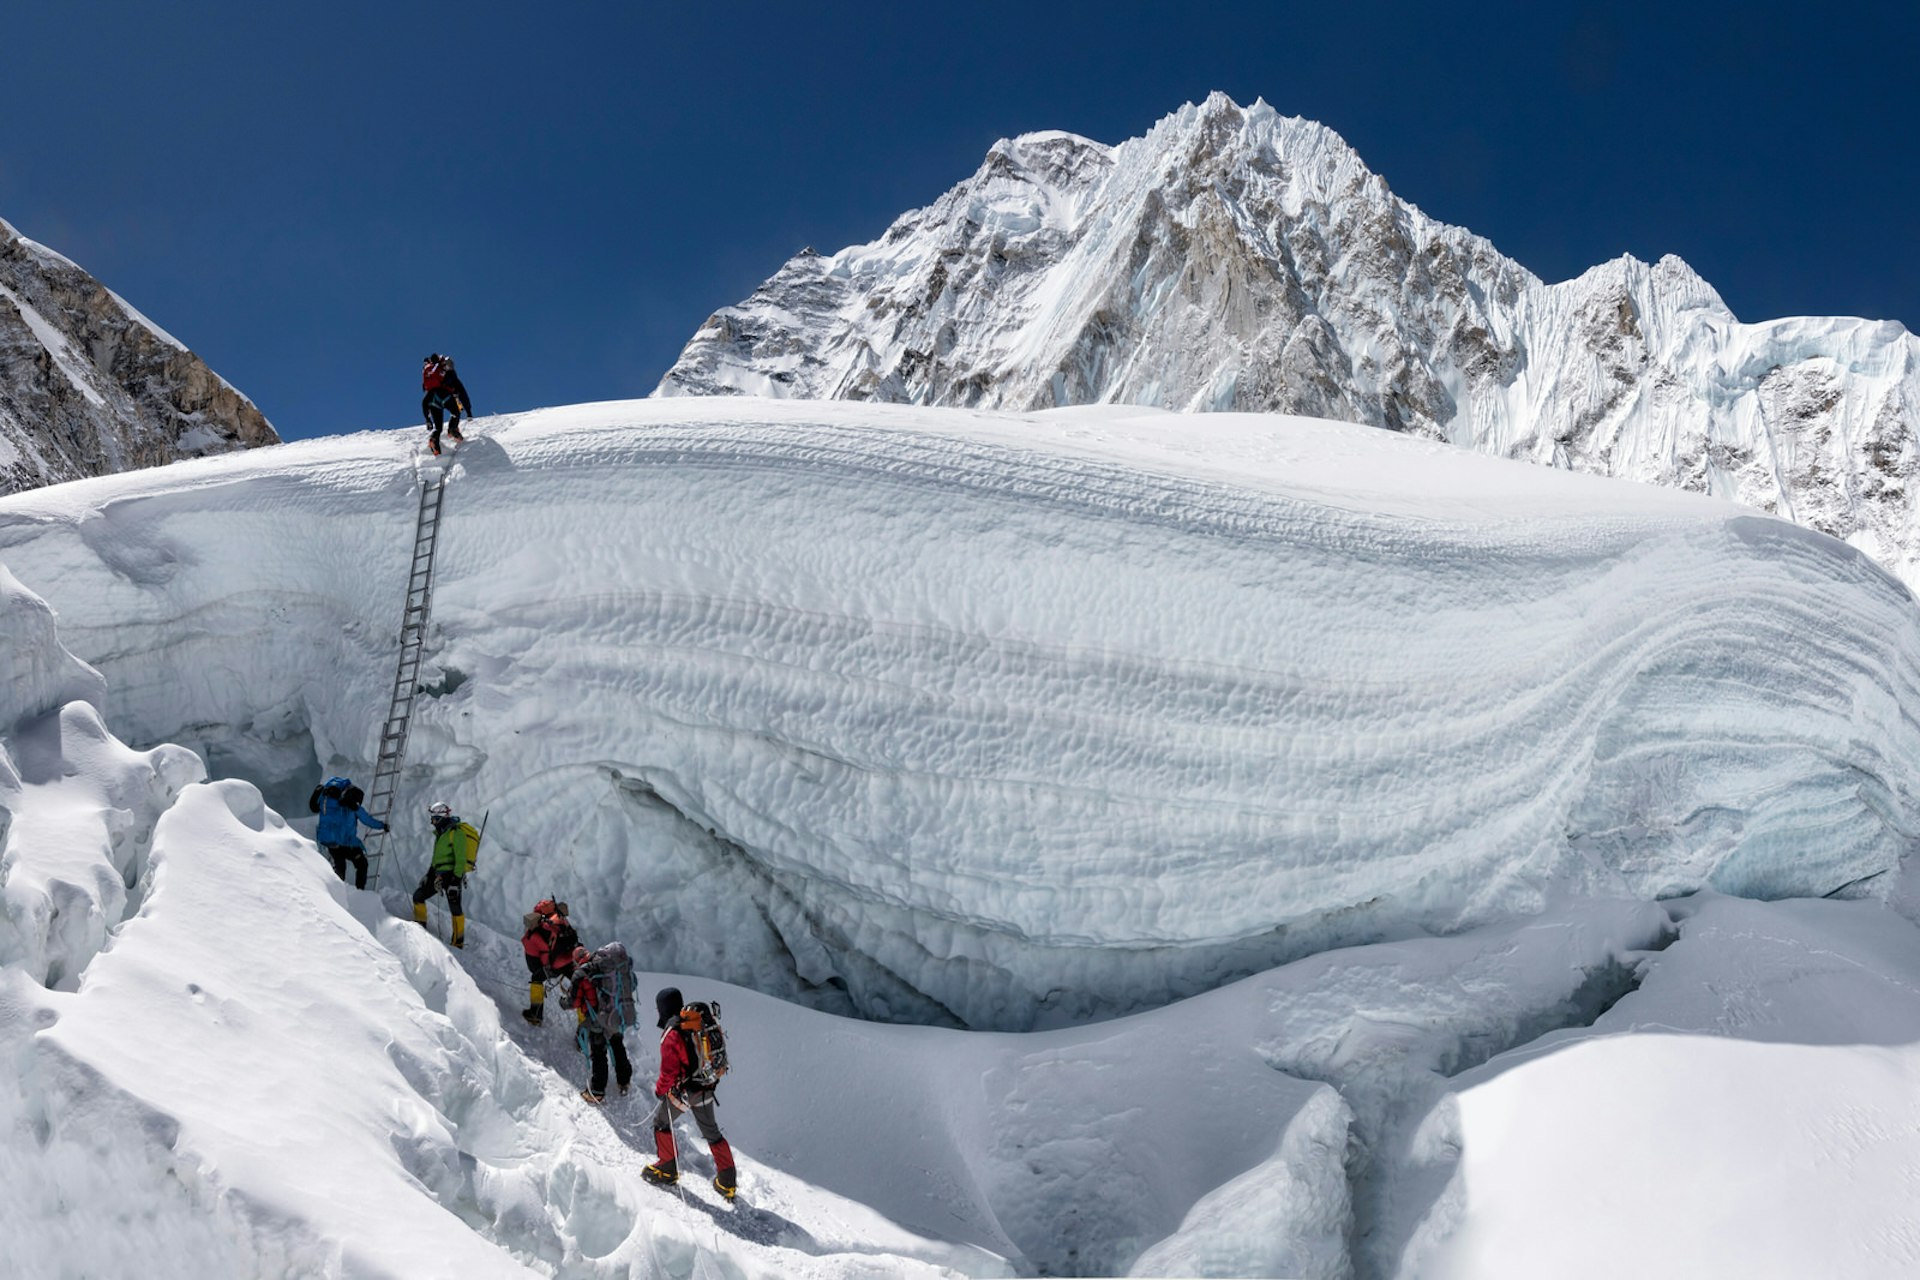 Climbers on the Khumbu Icefall above Everest Base Camp